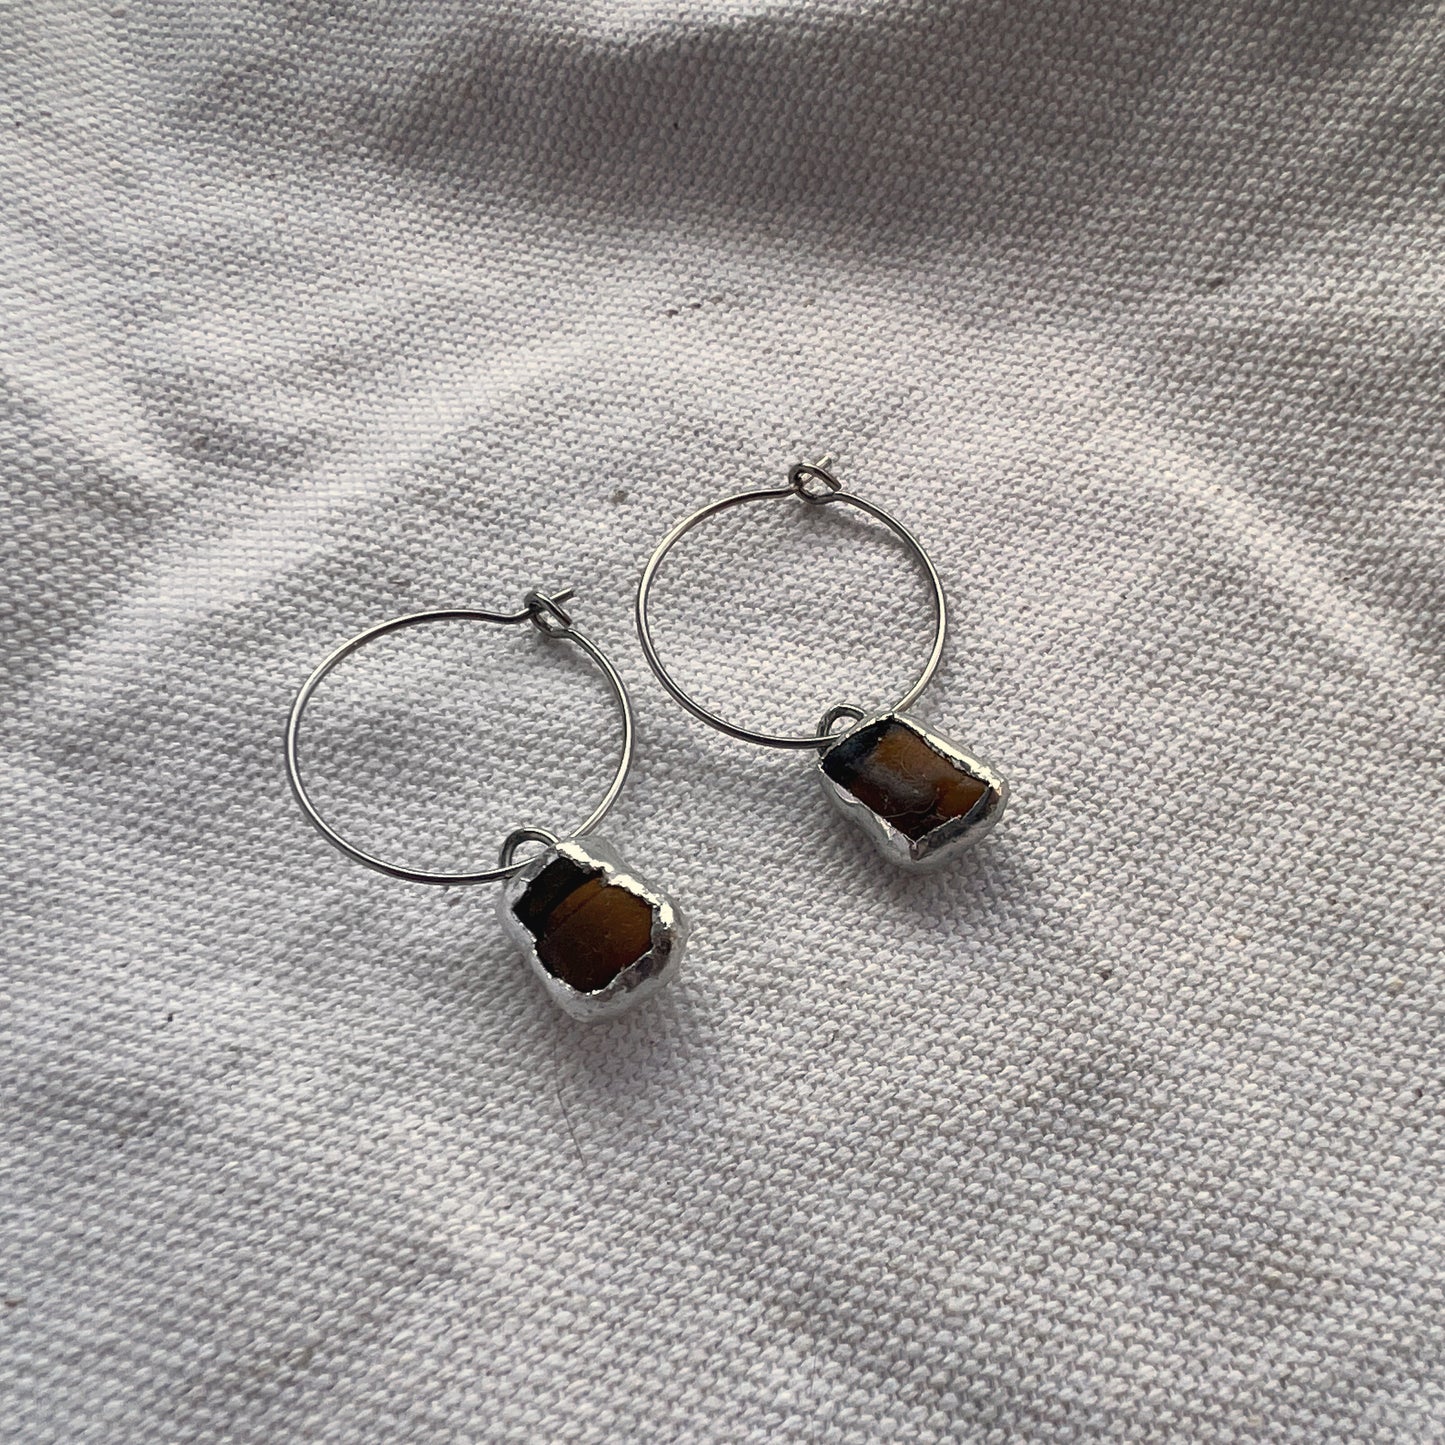 Chicago Beach Glass Earrings (Soldered Brown Hoops)